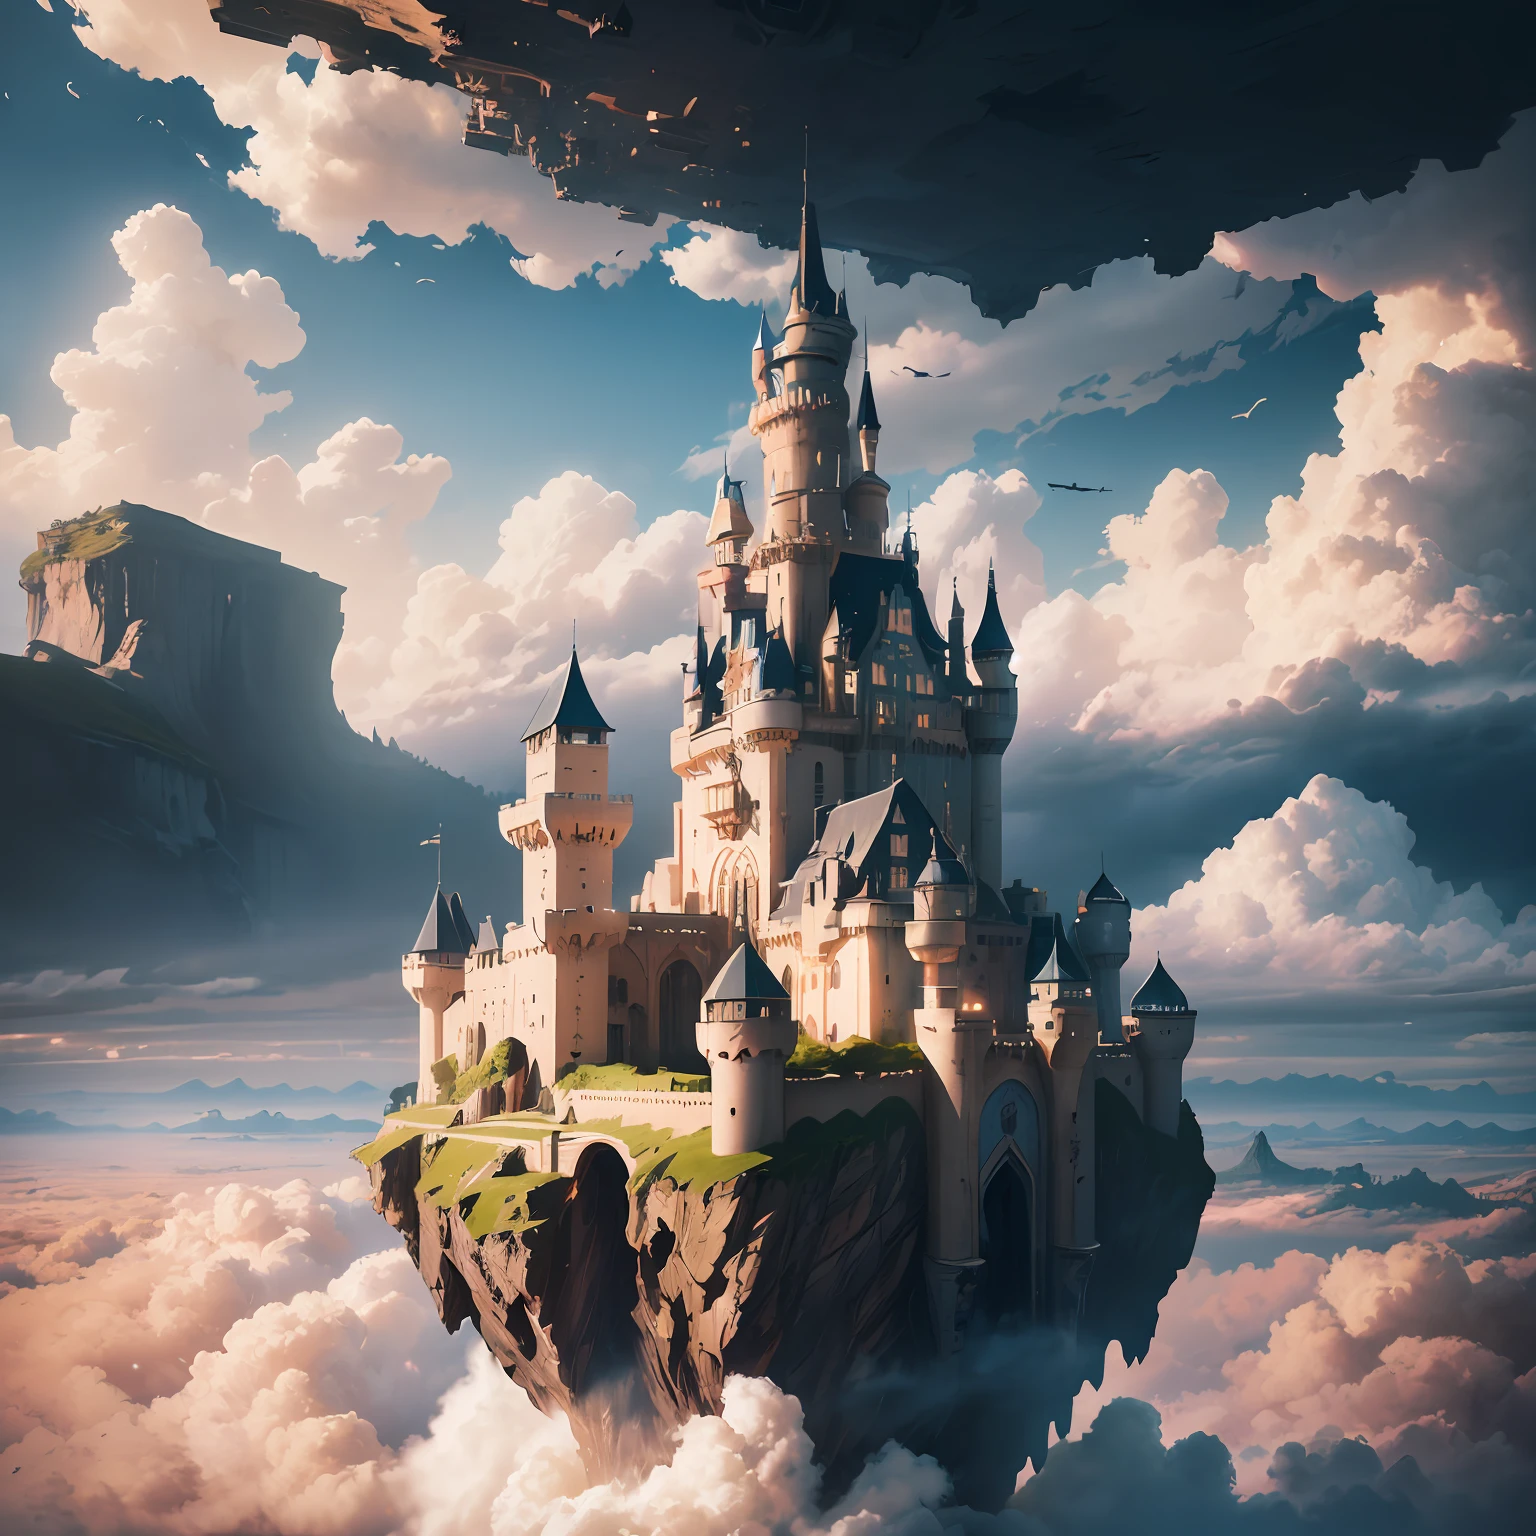 "there's an island floating in the sky among the 雲 with castle on it, 城はギアと機械部品でいっぱいです" 天空の城, 浮かぶ城, 雲, (映画のような, 8k, 傑作, 素晴らしい背景, ダイナミックライティング, ズームアウトする, 非常に超高精細, 魅惑的な風景の景色)